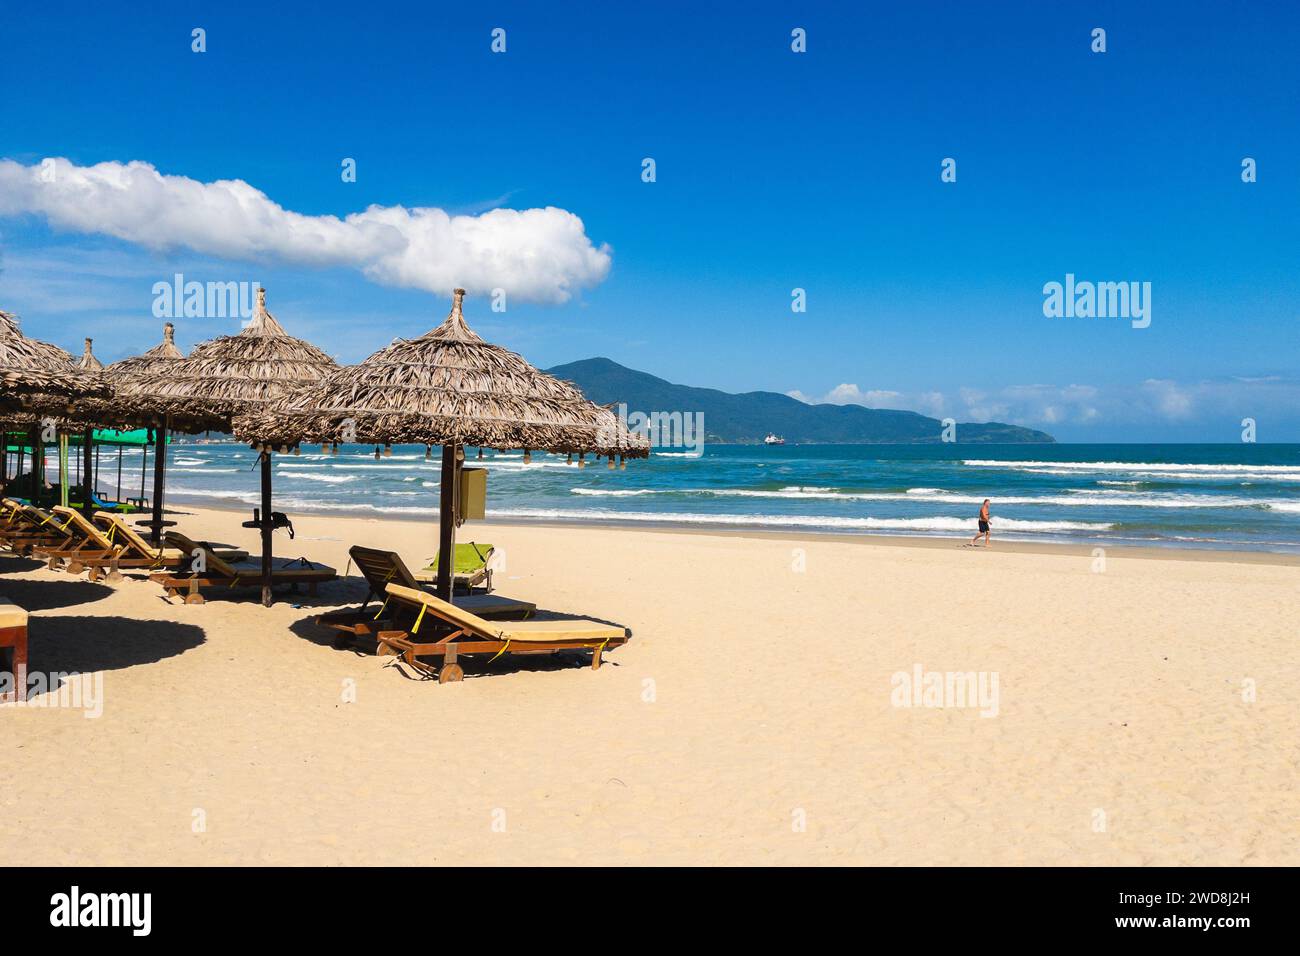 Scenery of My Khe Beach located in Da Nang, central Vietnam Stock Photo